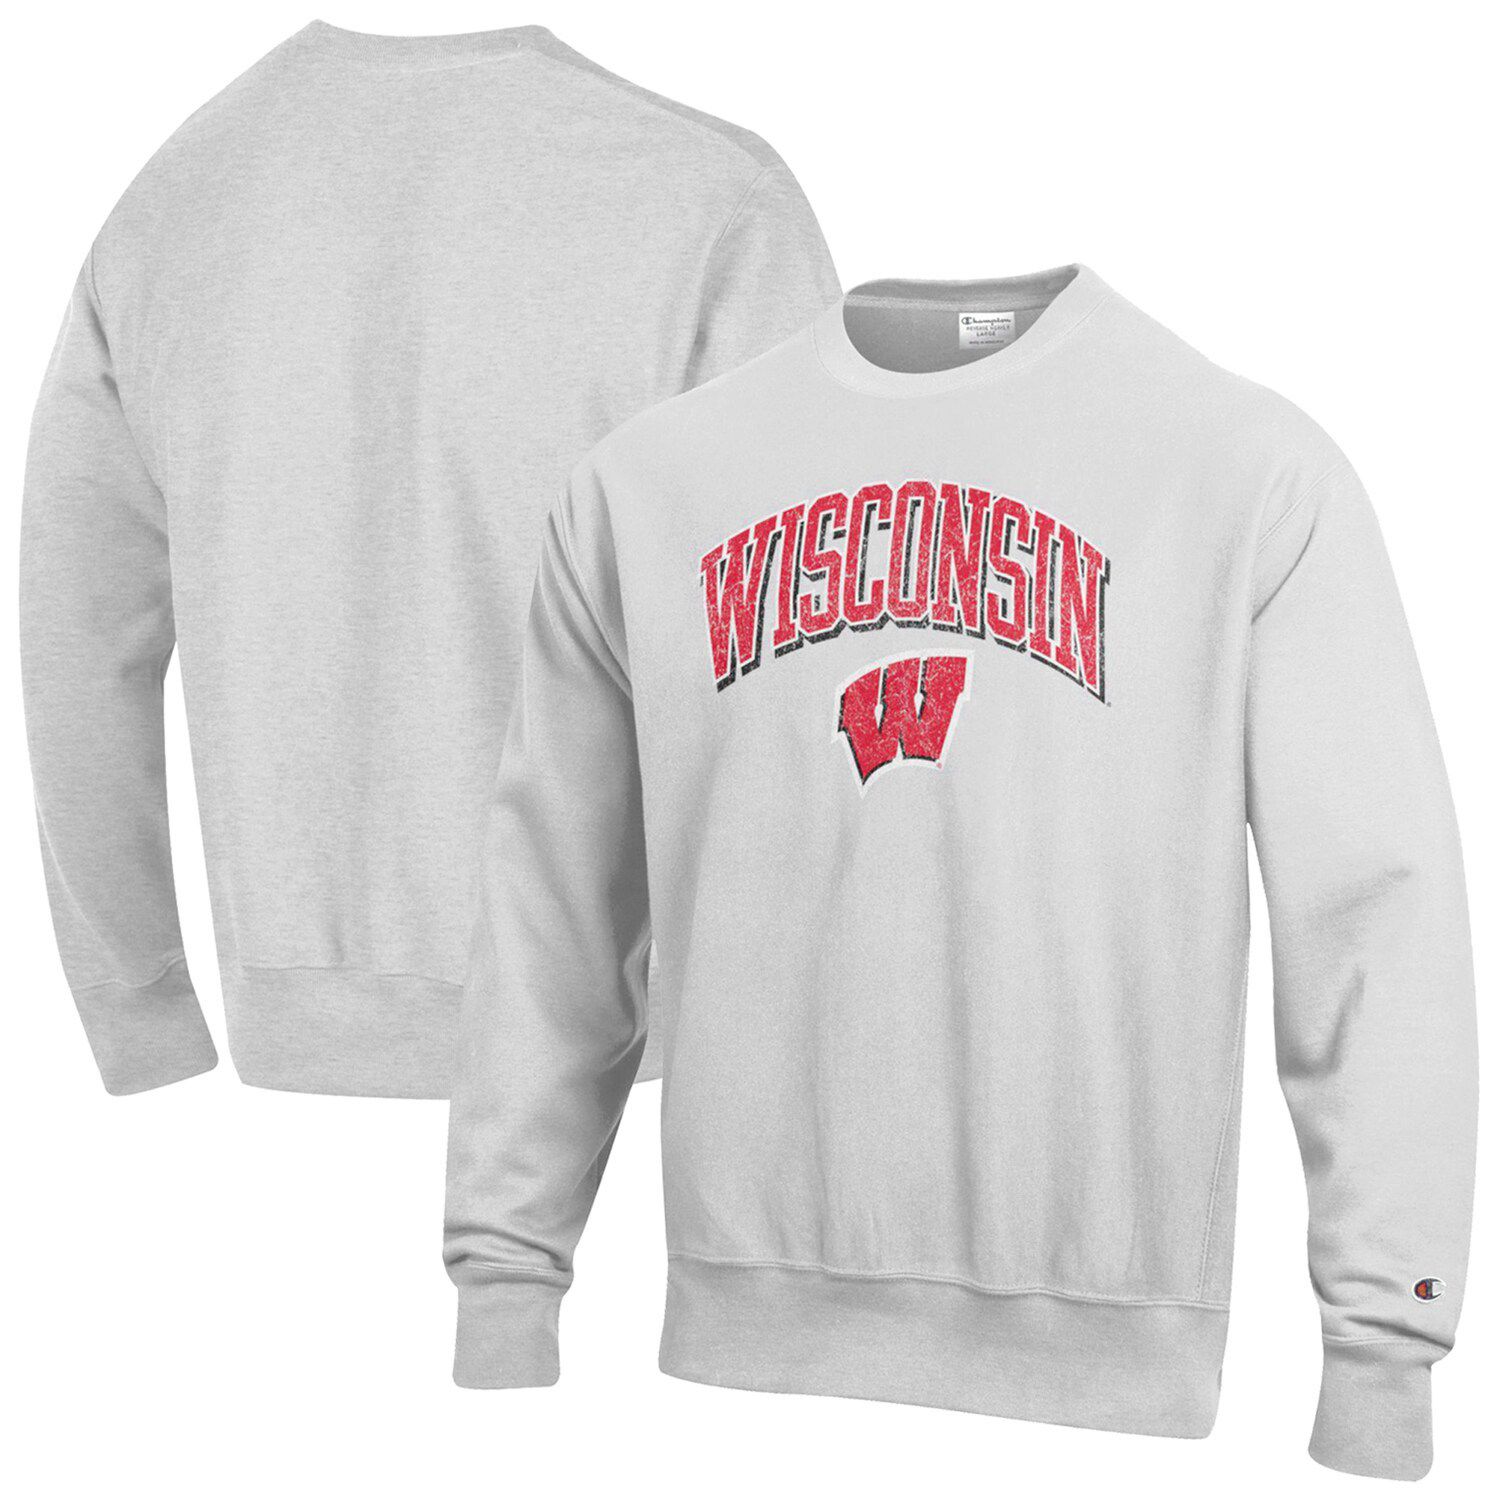 Wisconsin Crewneck State Sweatshirt Wisconsin Sweatshirt Wisconsin Shirt College Sweatshirt State Gifts Unisex Sweatshirt